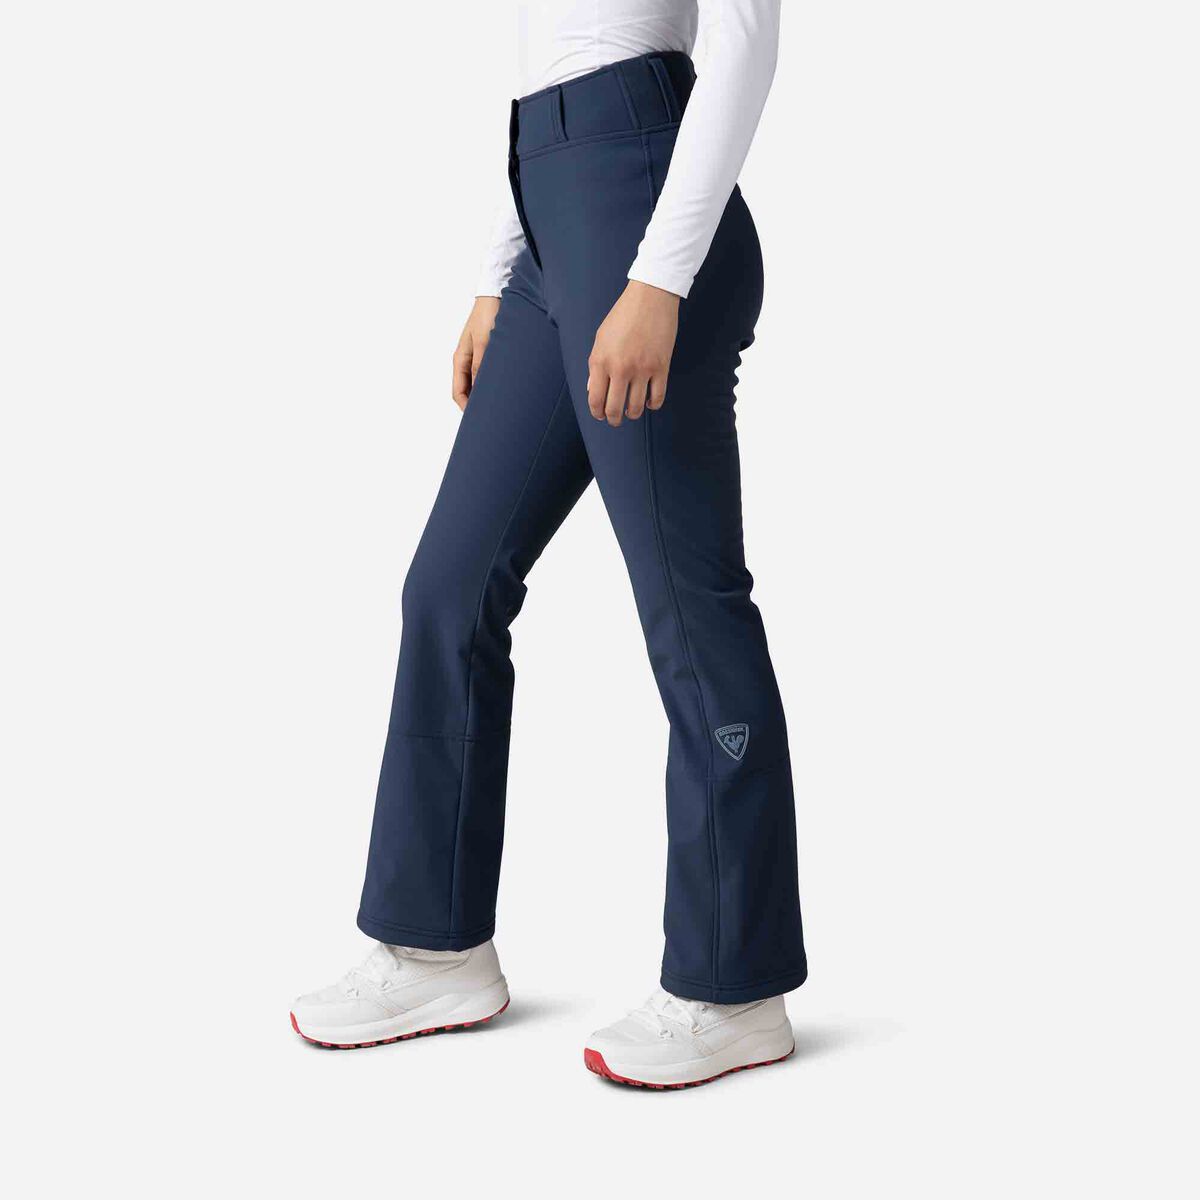 Women's Soft Shell Ski pants, Ski pants